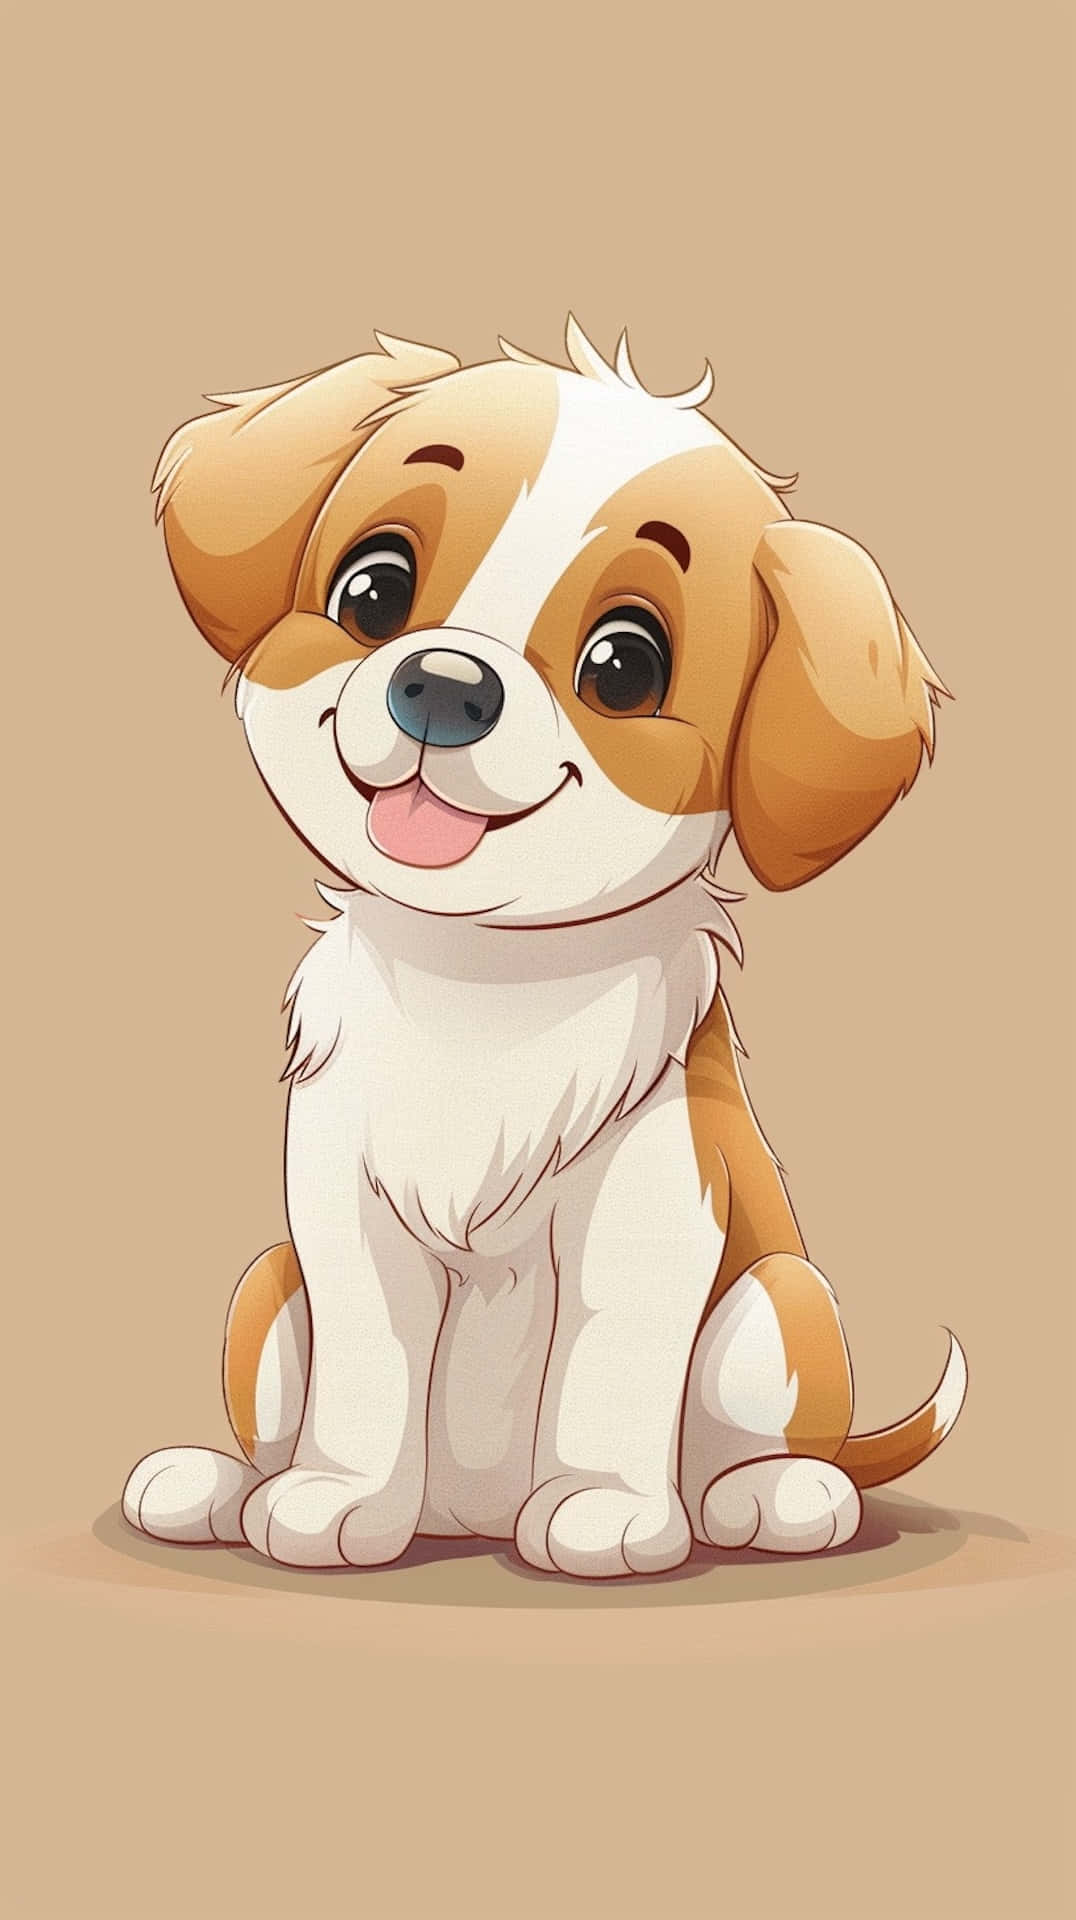 Adorable_ Anime_ Puppy_ Illustration.jpg Wallpaper